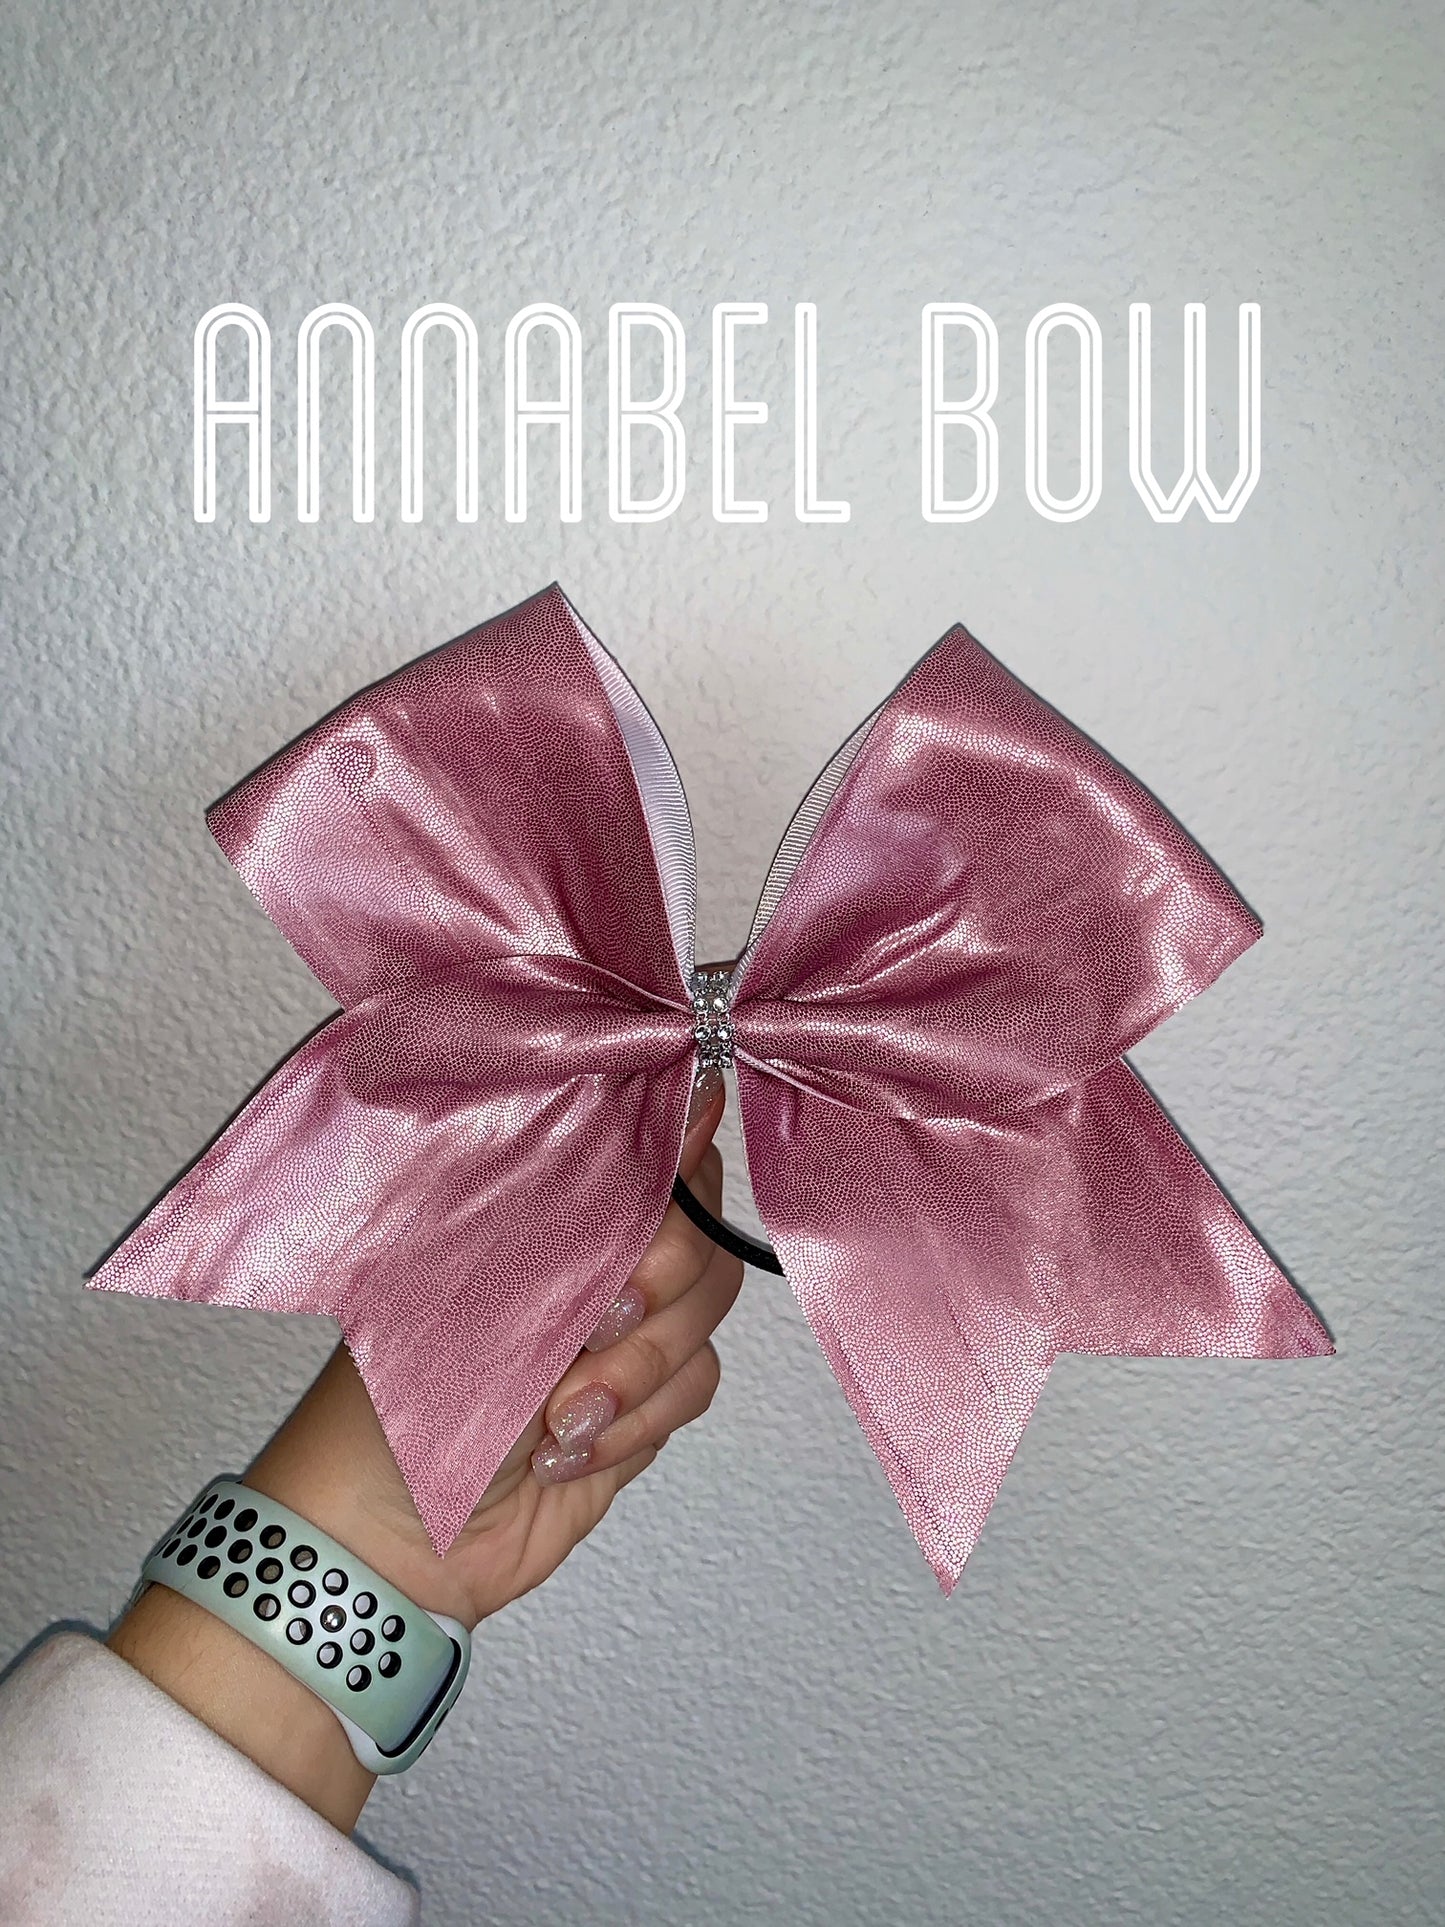 Annabel Bow